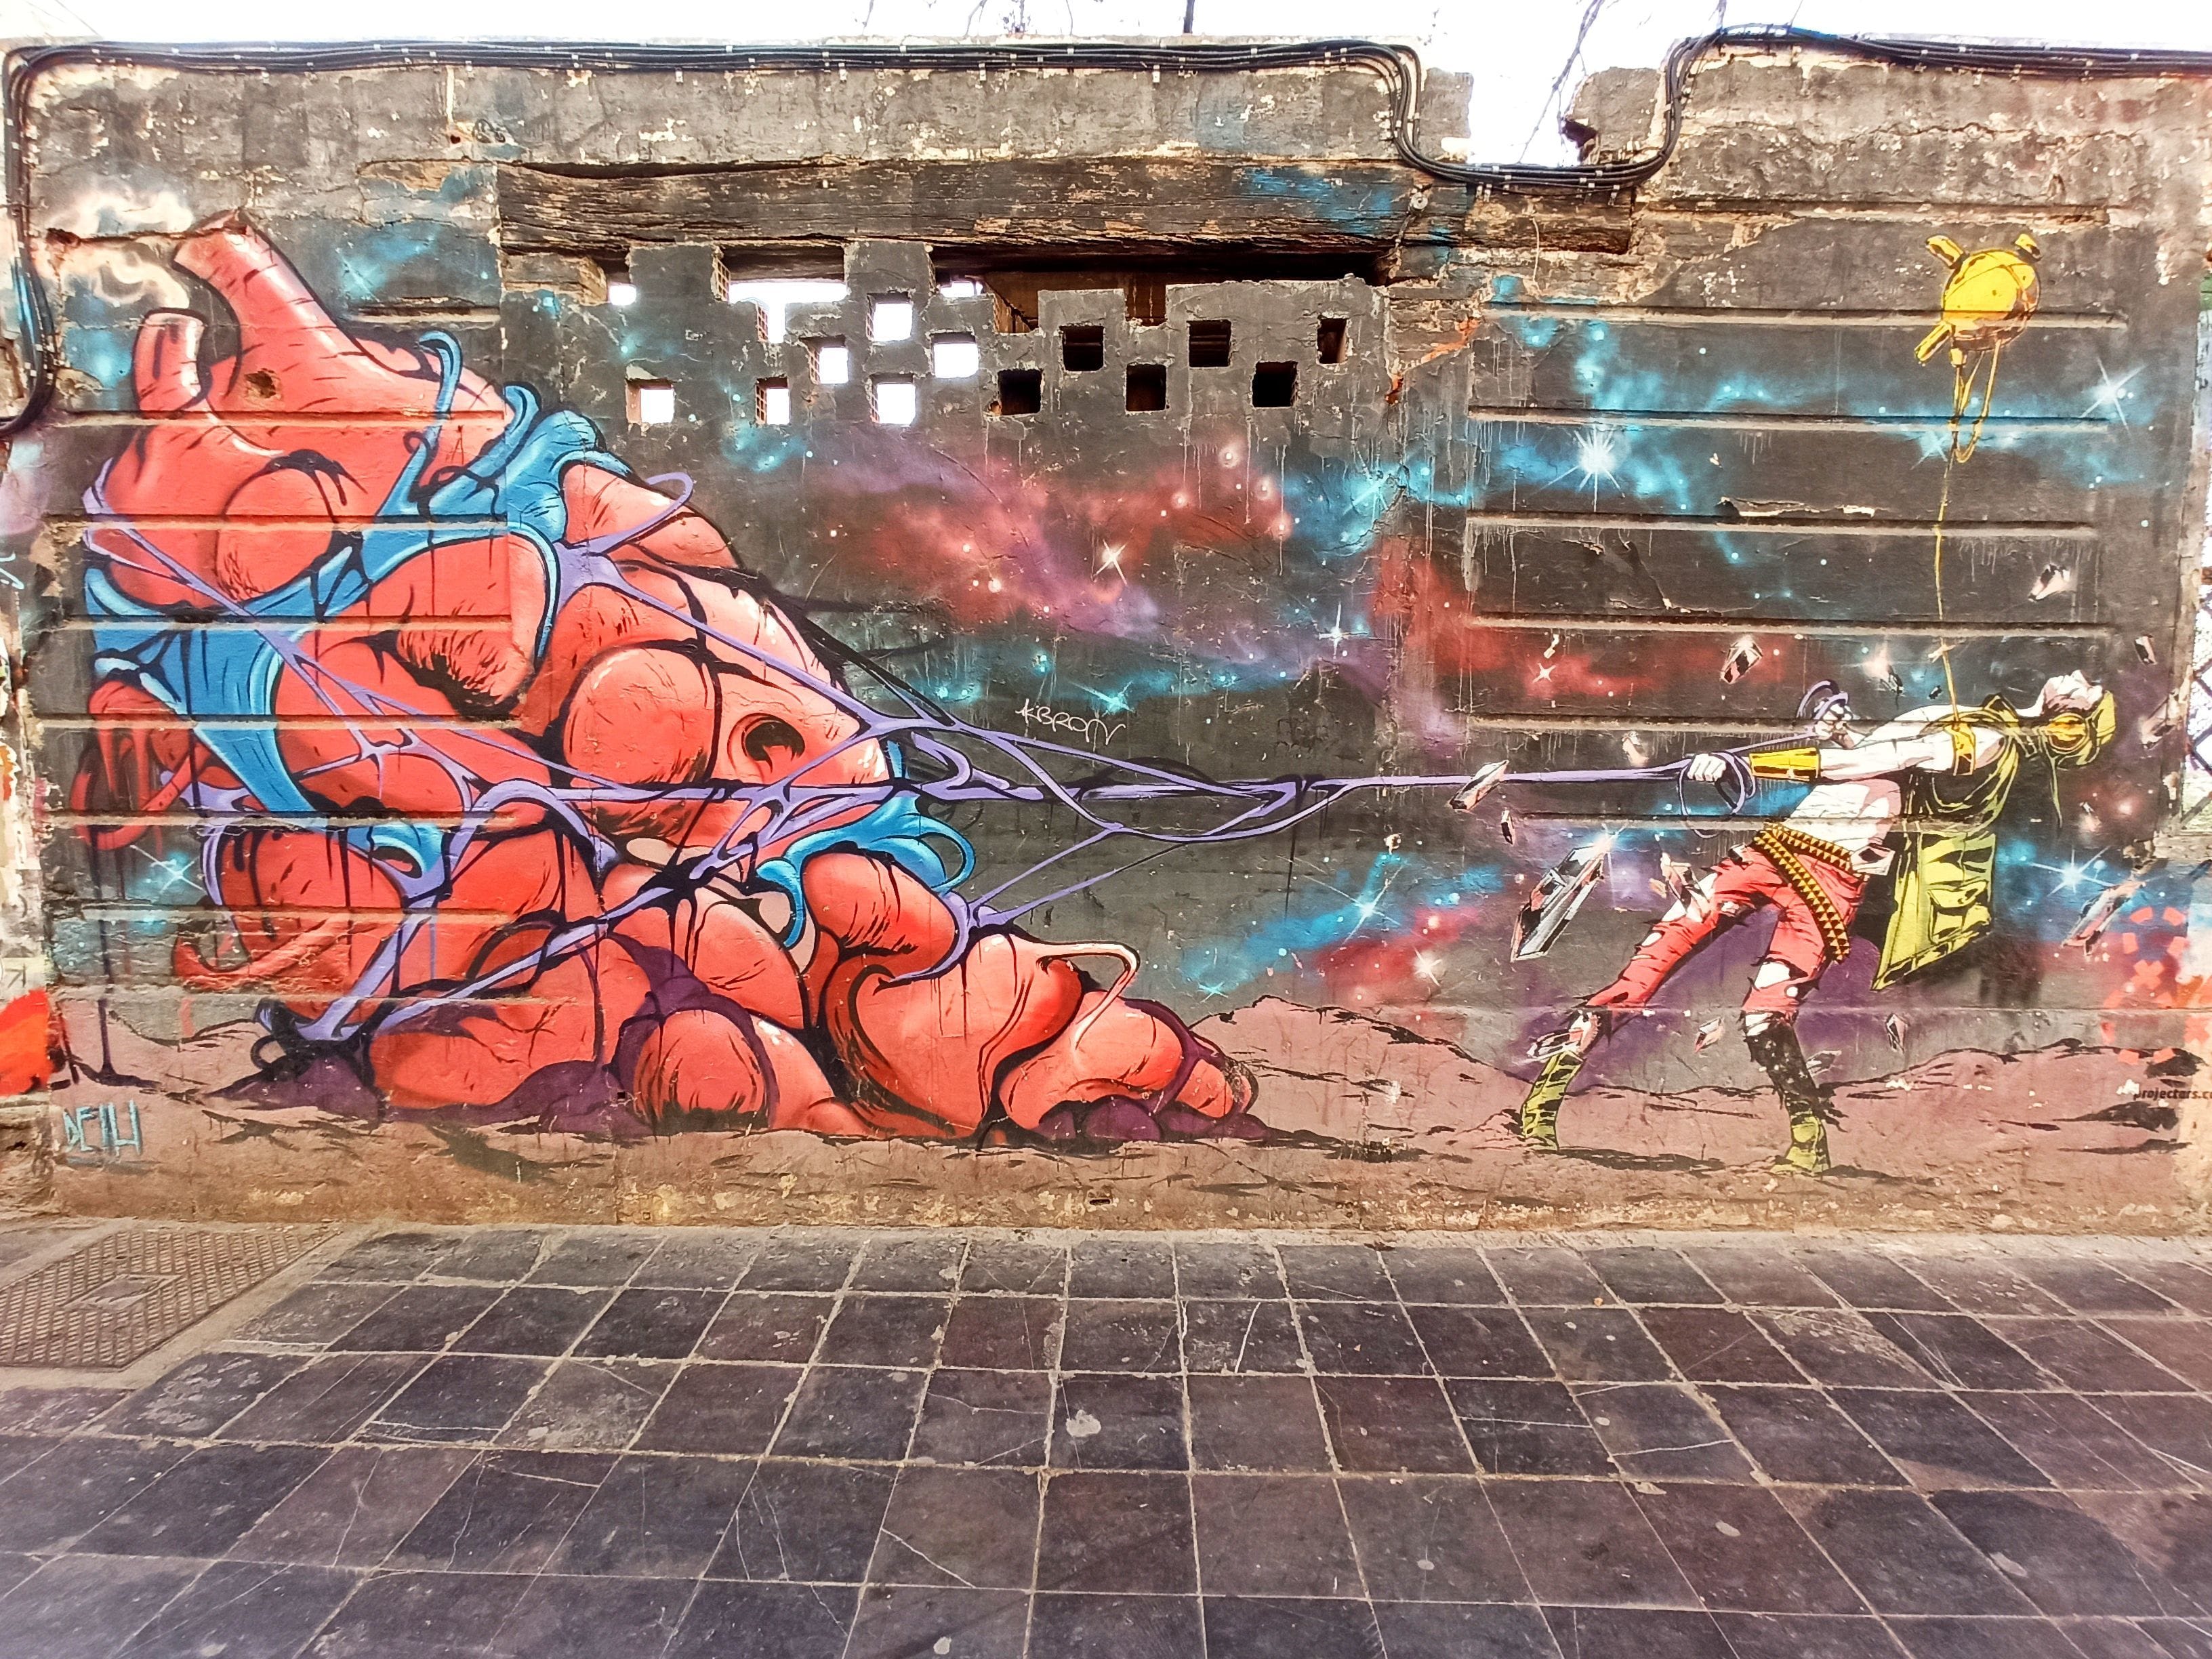 Graffiti 4764  by the artist Deih xlf captured by elettrotajik in València Spain